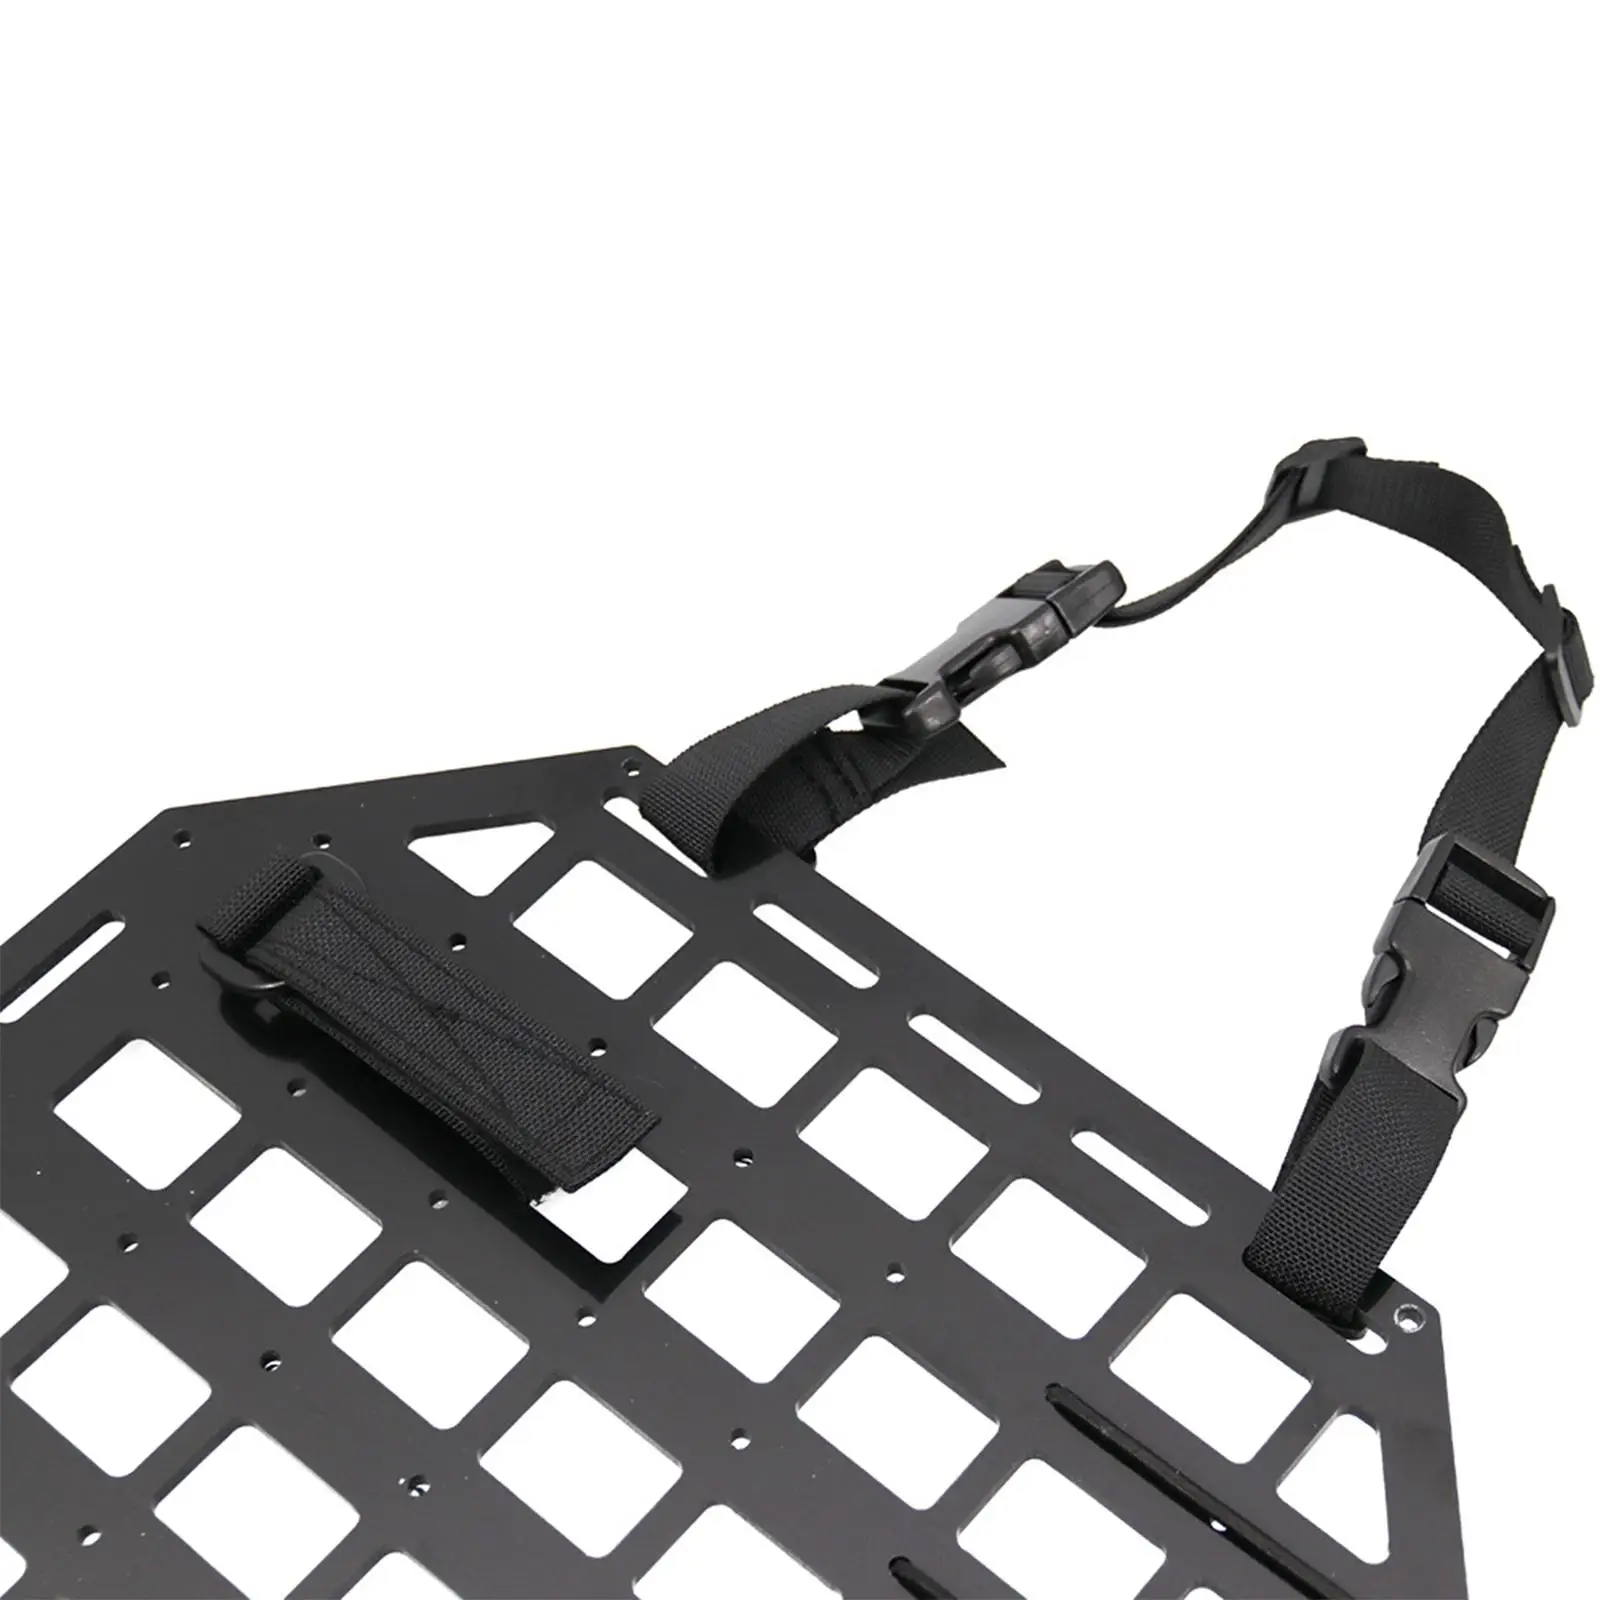 Rigid Molle Panel Tactical Seat Organizer Accessories Headrest Organizer Panel Plastic Visor Panel Insert Holder Fit for Car